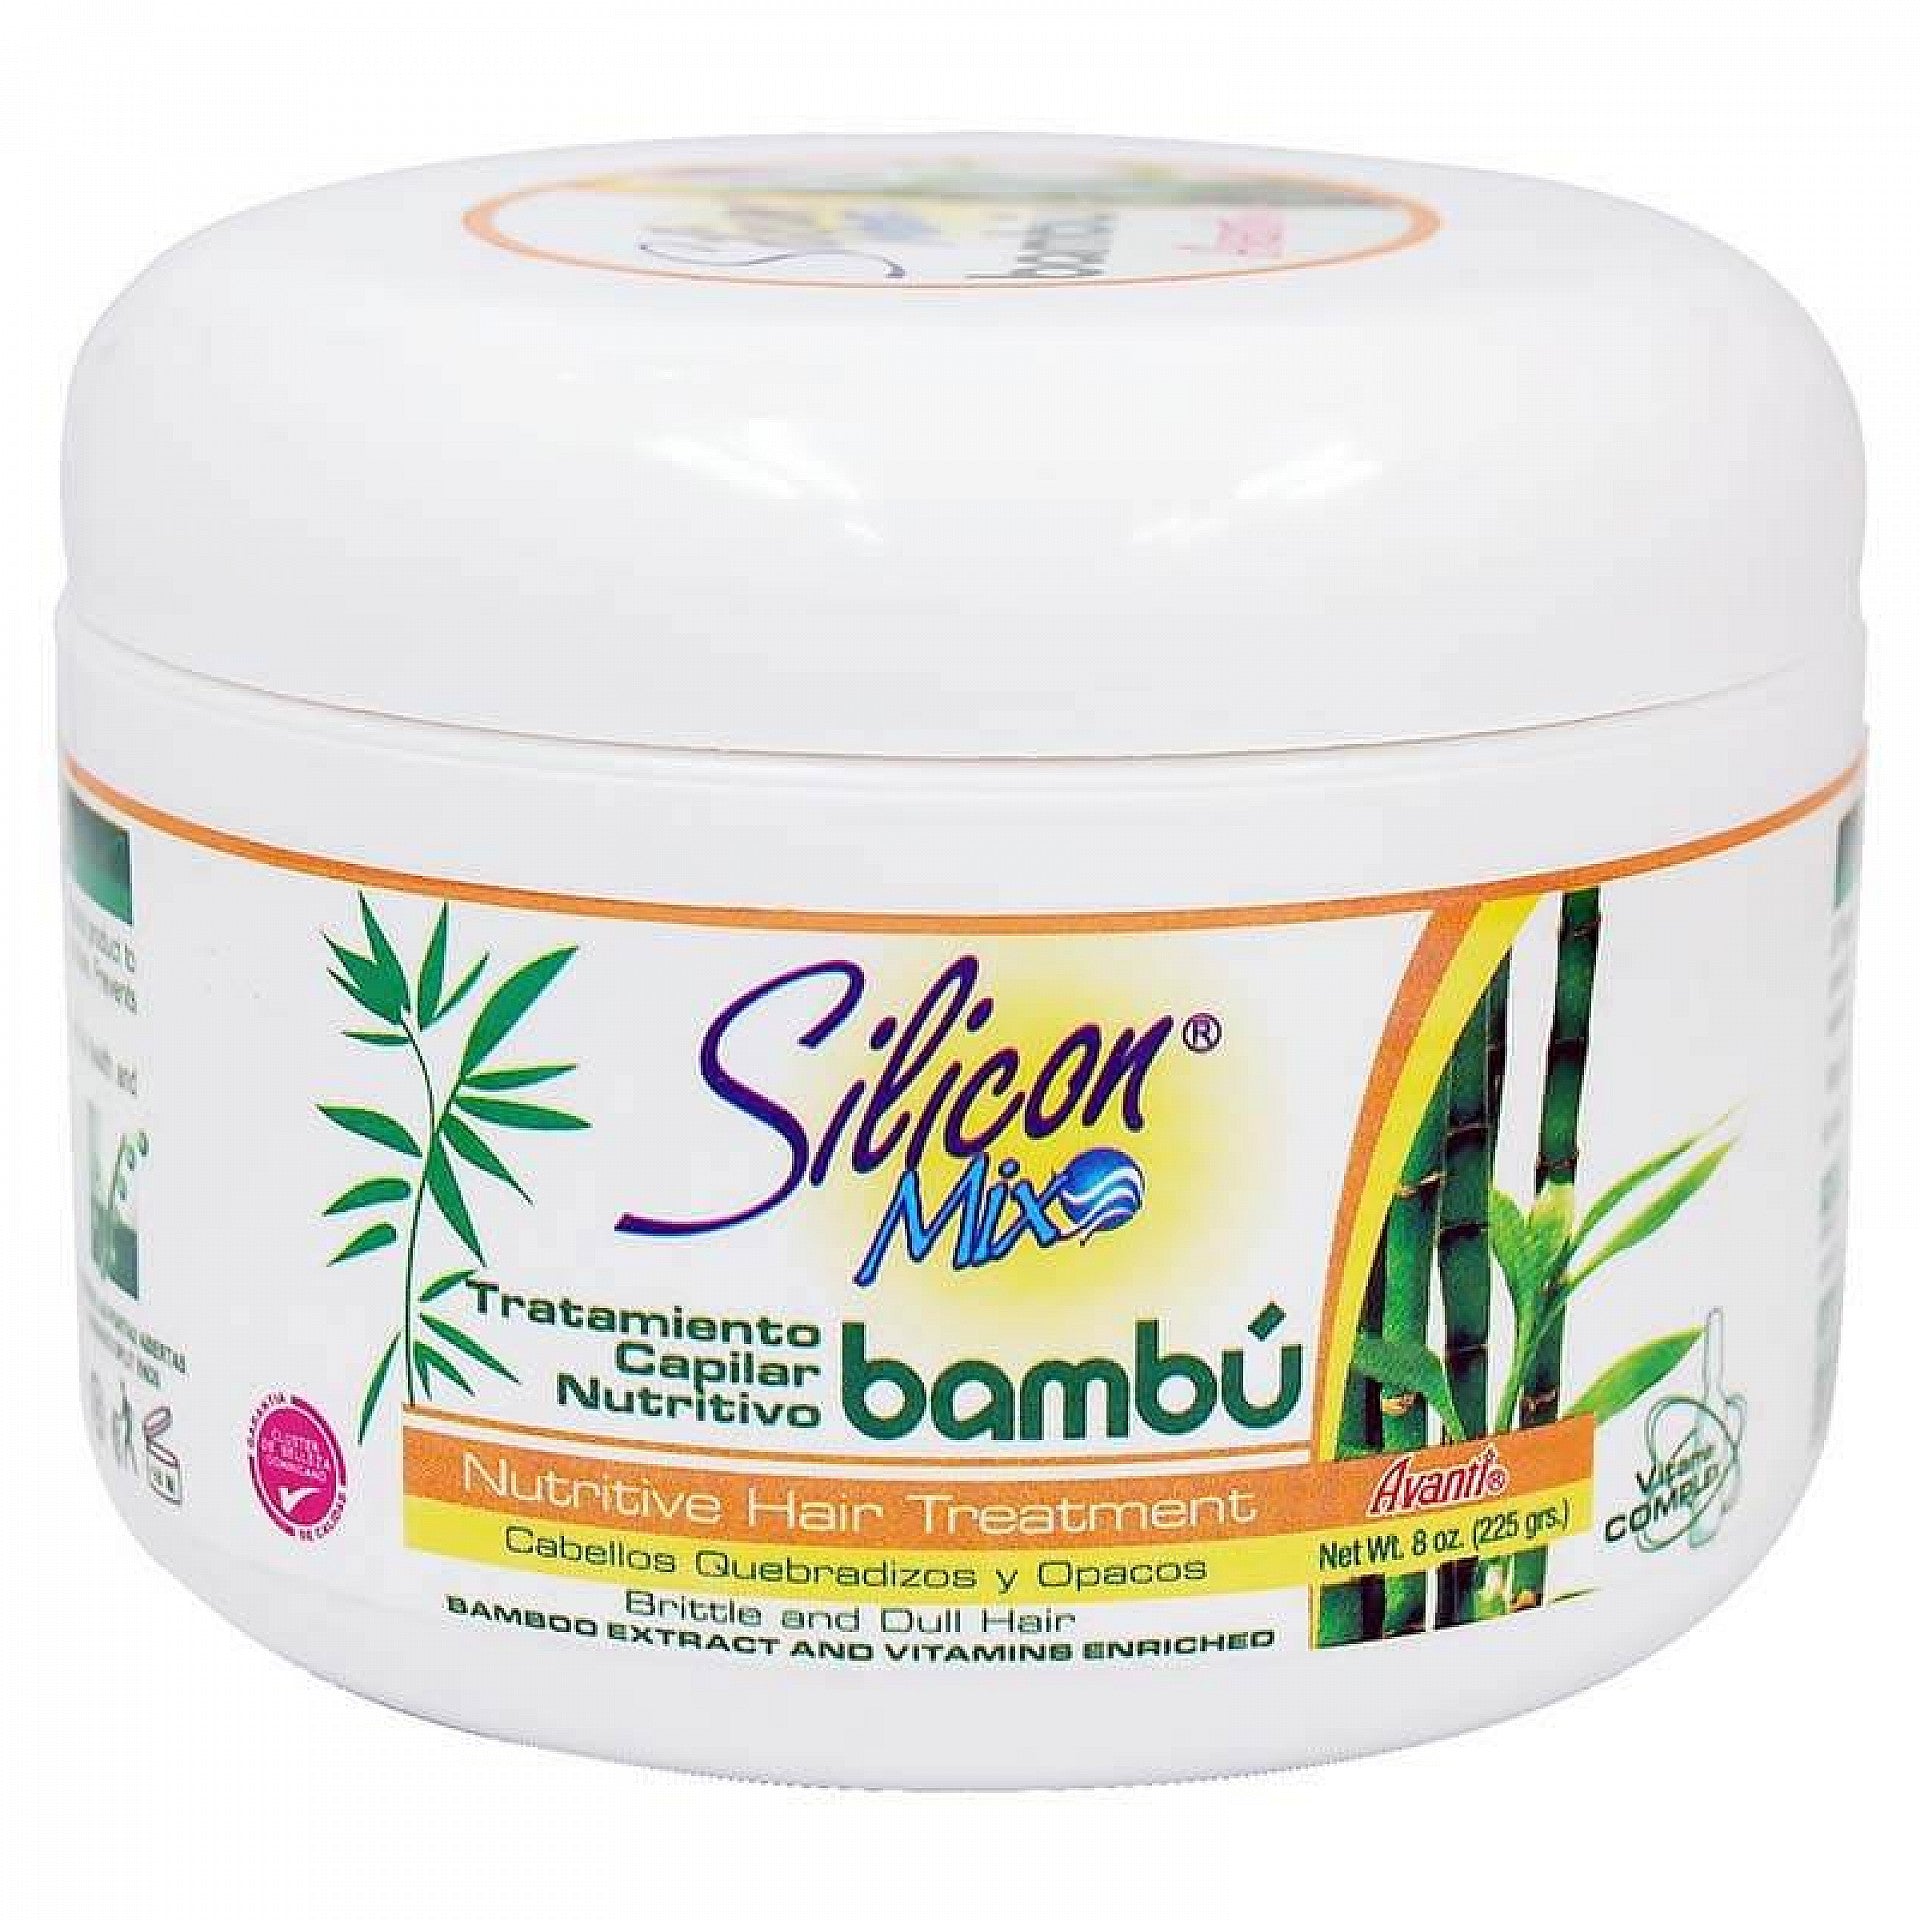 Silicon Mix Bamboo Nutritive Hair Treatment 8oz